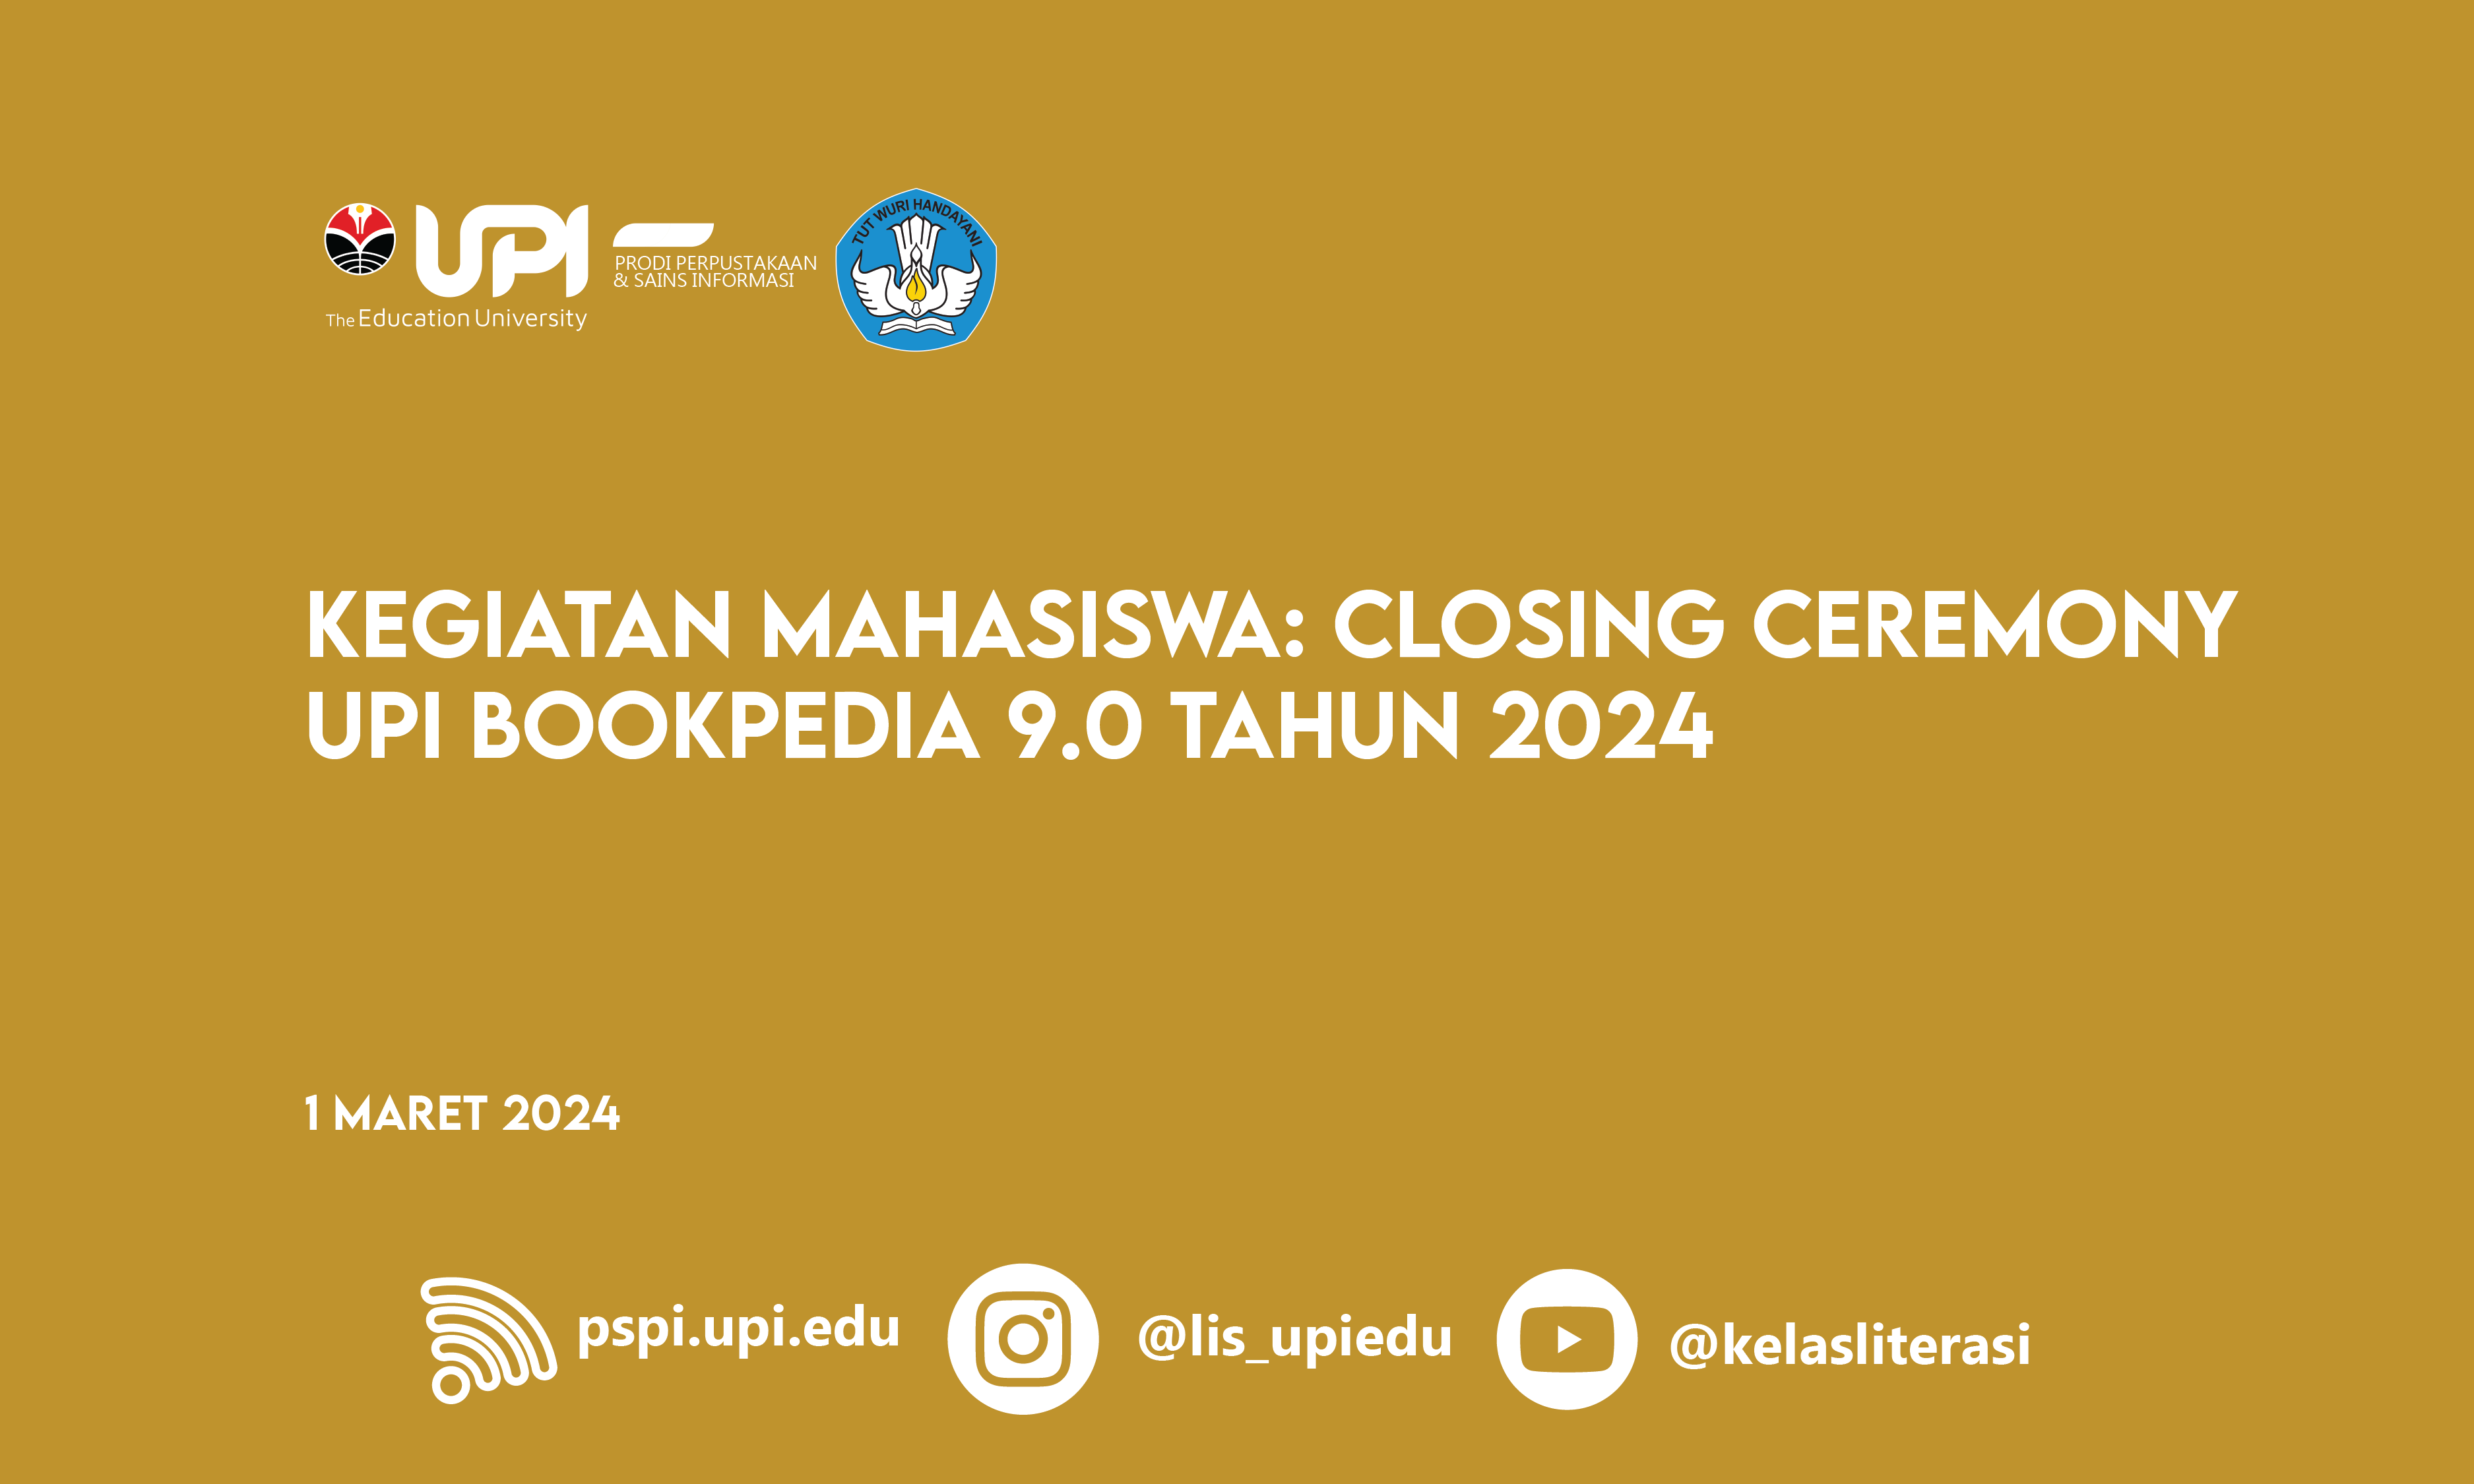 KEGIATAN MAHASISWA: CLOSING CEREMONY UPI BOOKPEDIA 9.0 TAHUN 2024